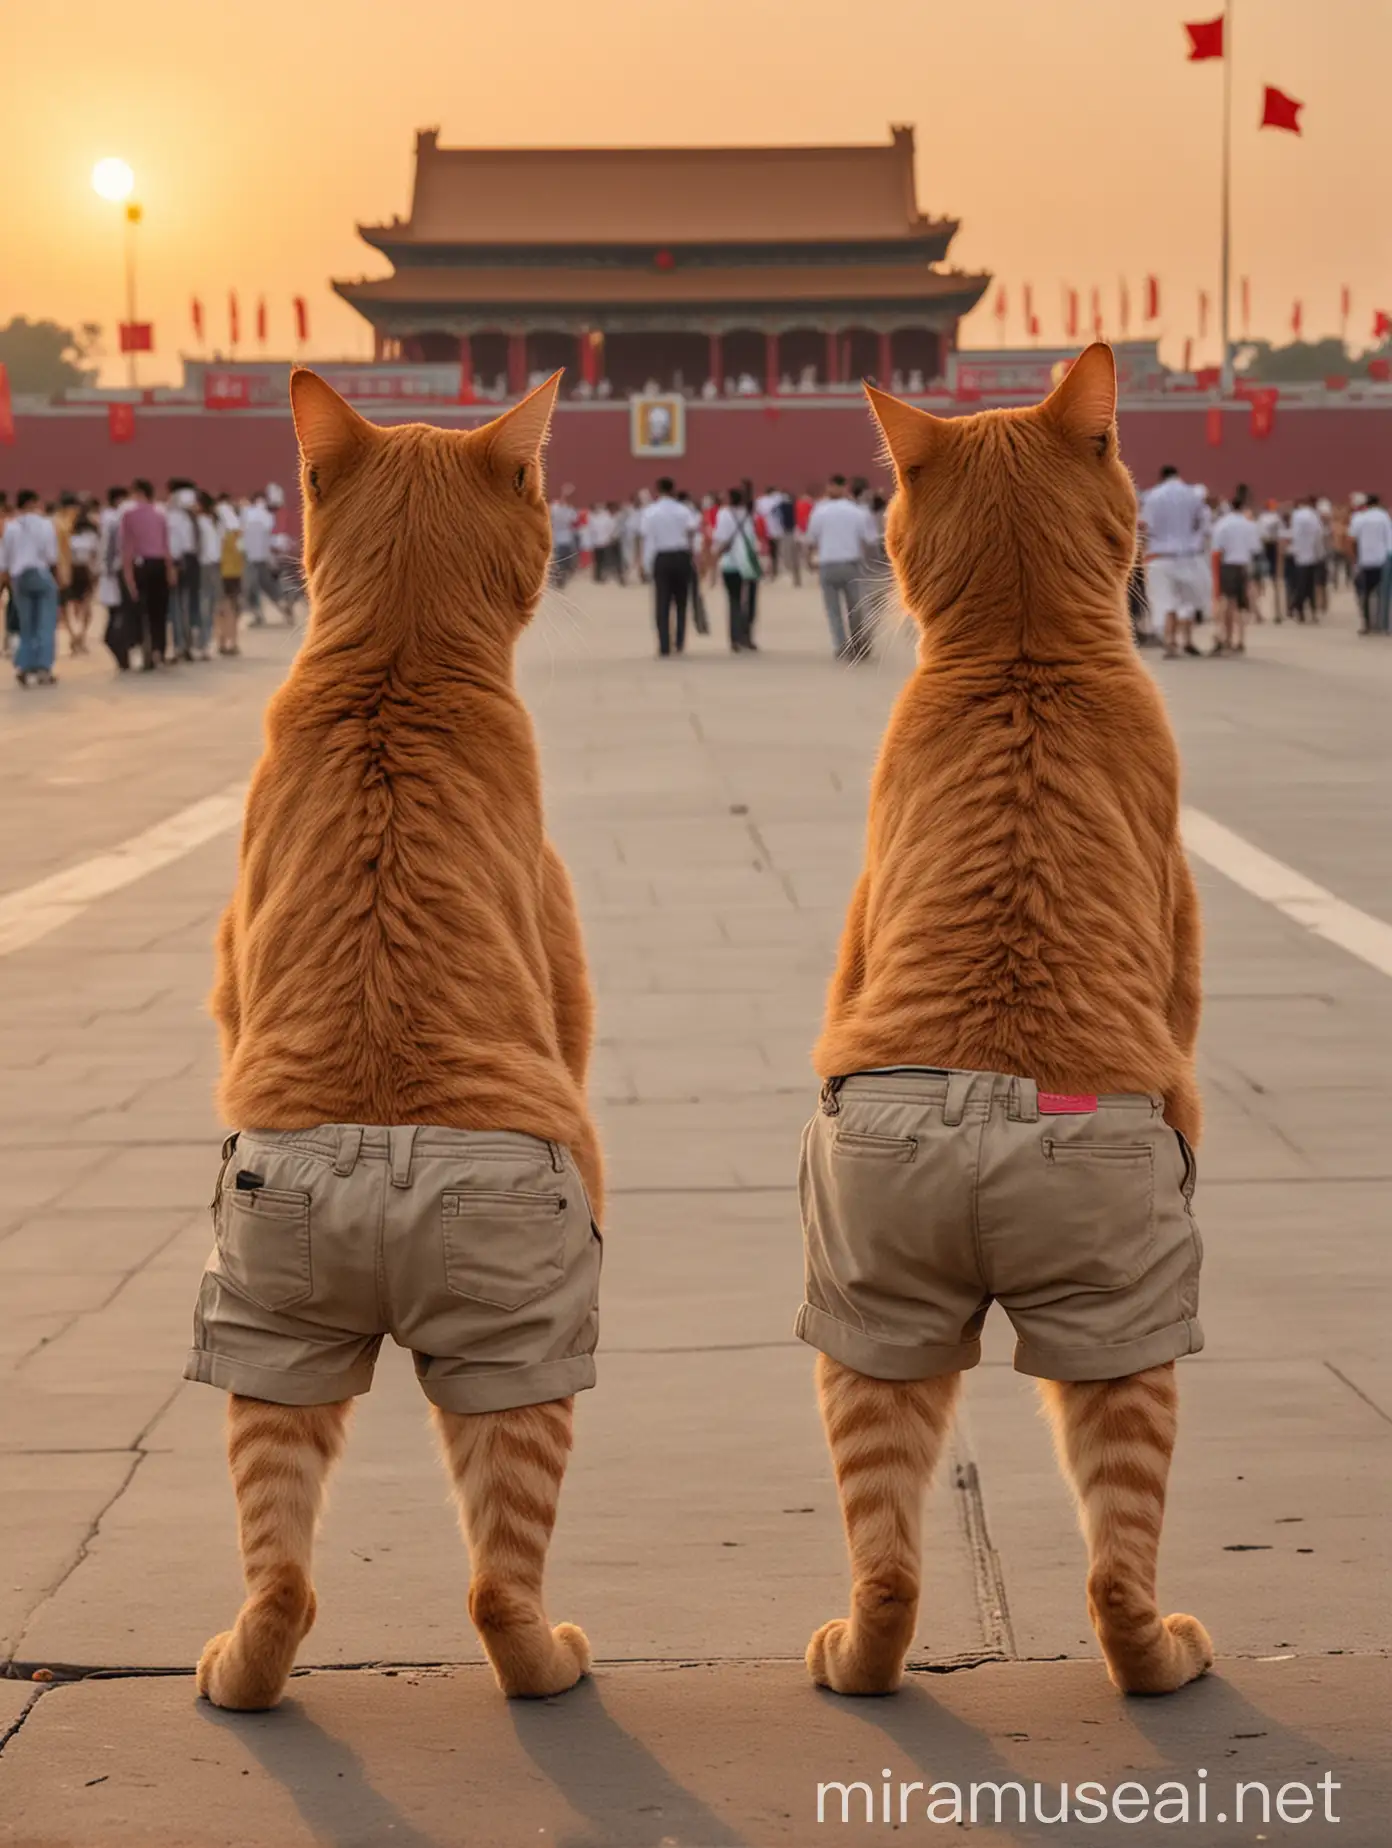 Two Orange Cats in Shorts Watching Tiananmen Sunset Fire